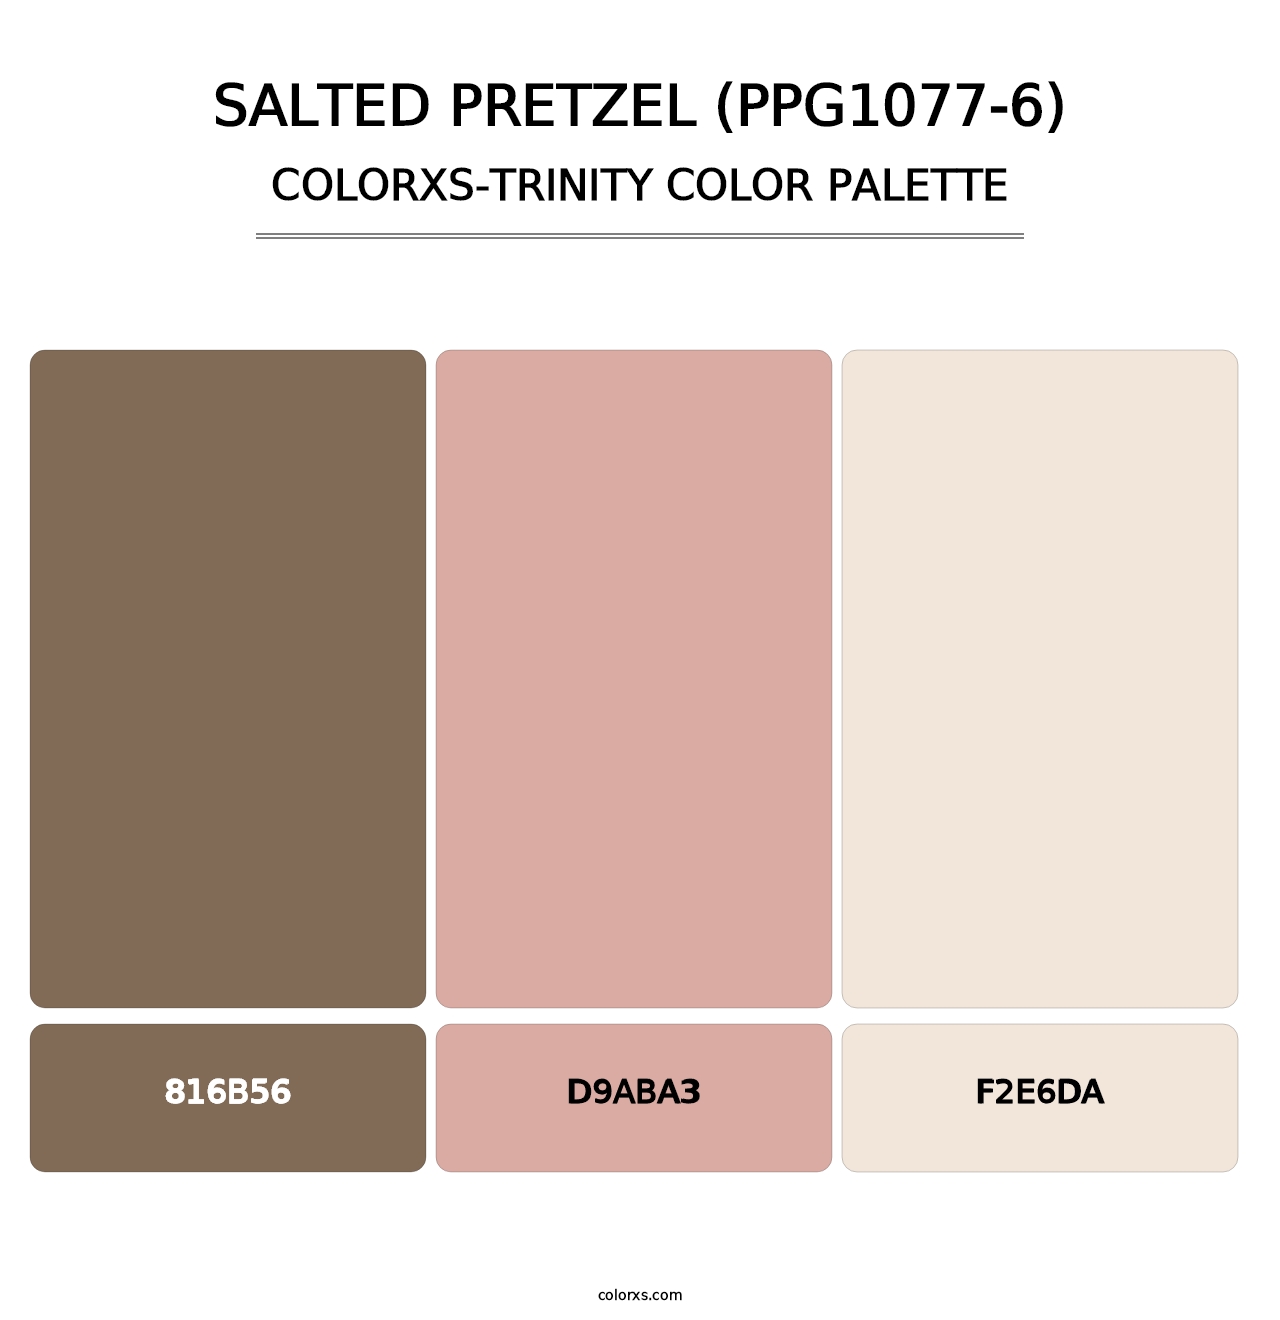 Salted Pretzel (PPG1077-6) - Colorxs Trinity Palette